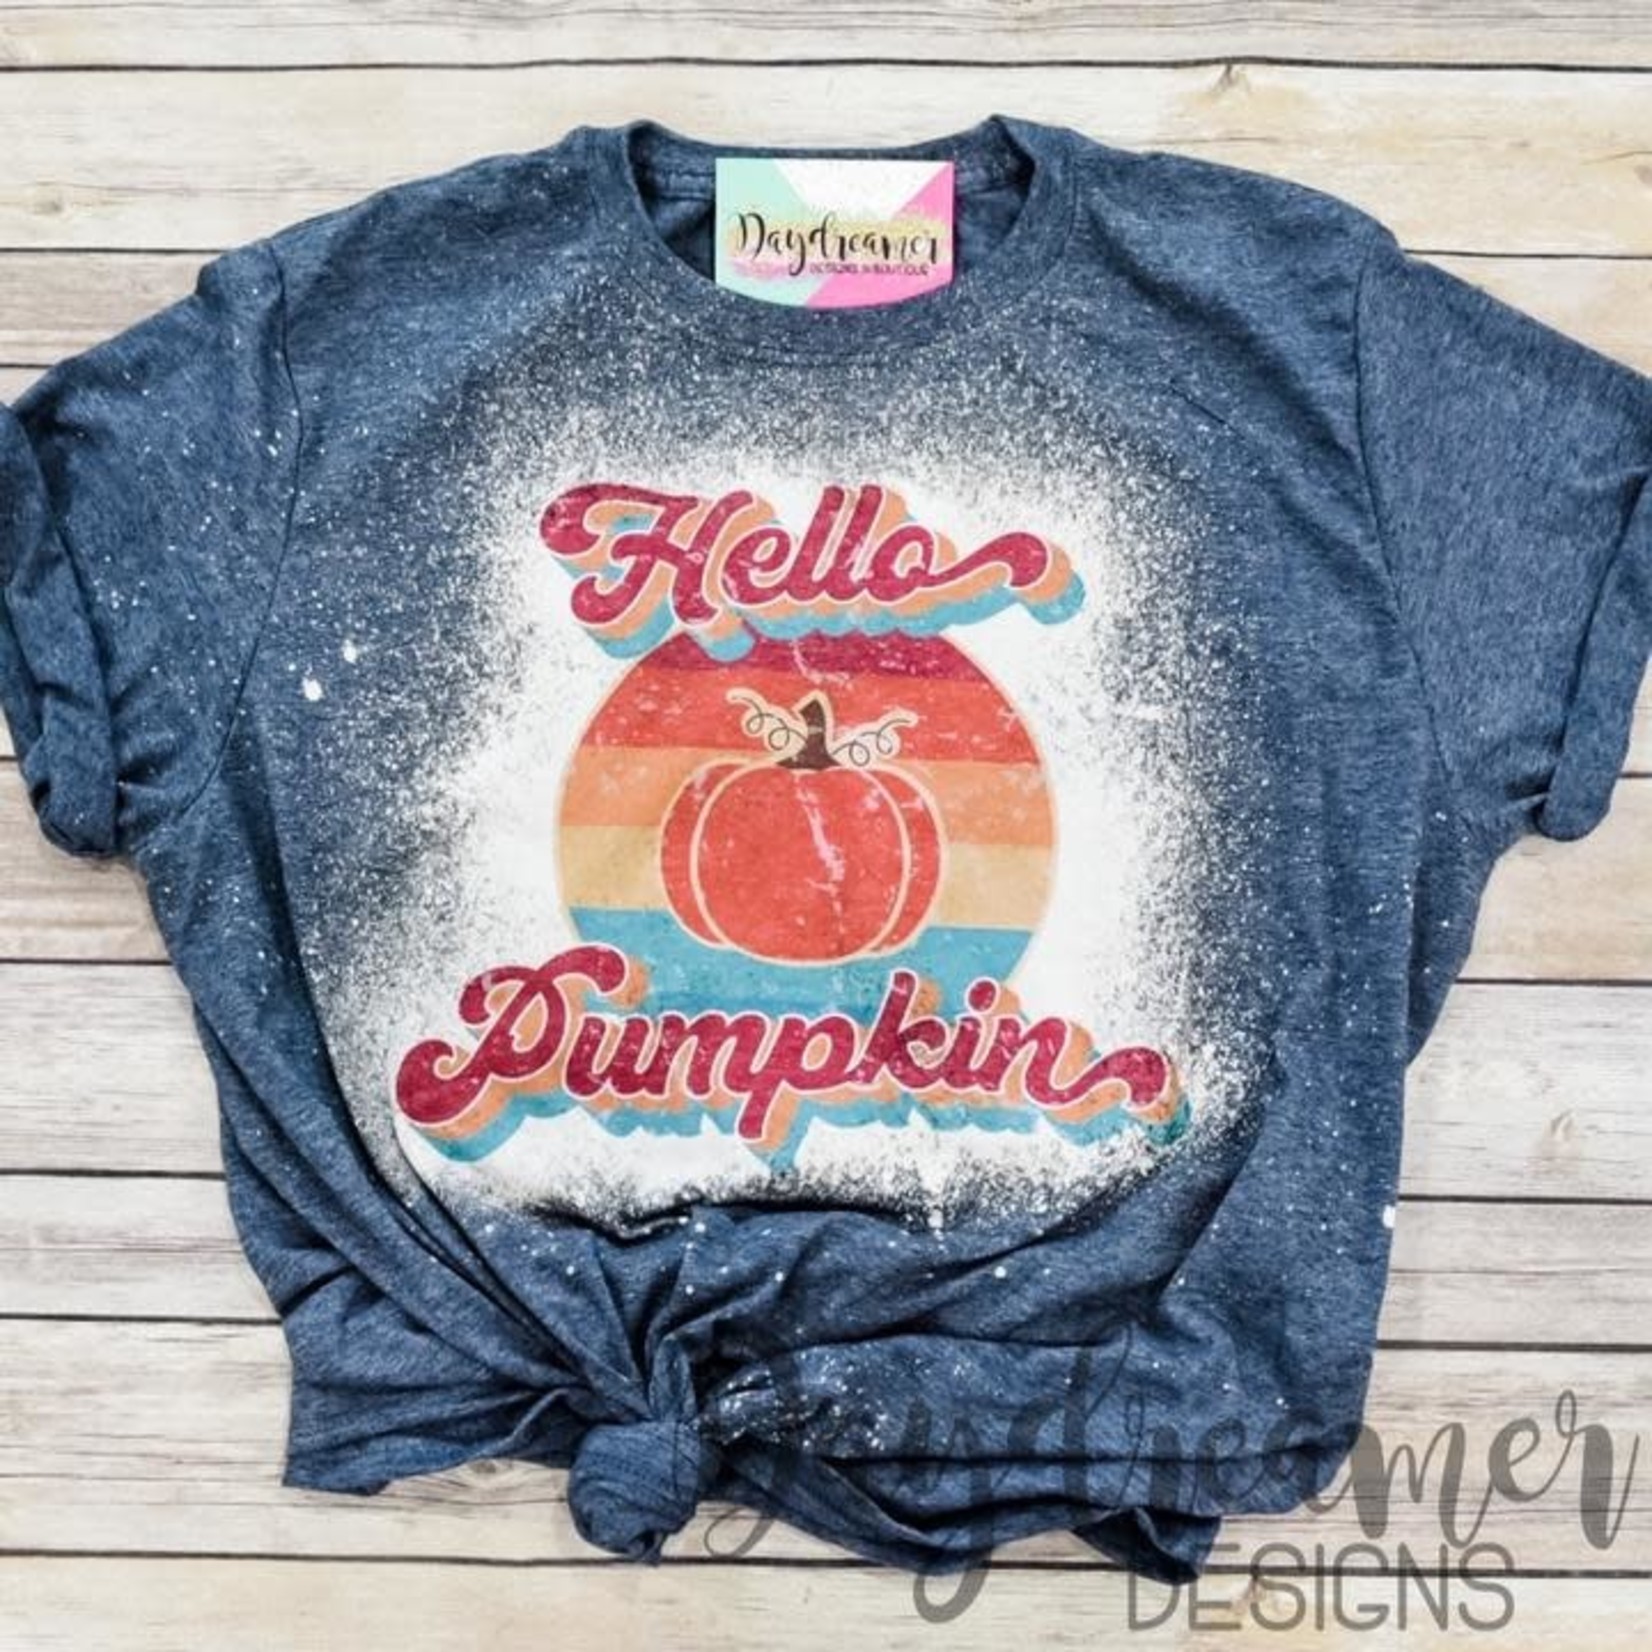 Daydreamer Designs Daydreamer Designs Hello Pumpkin Graphic T-Shirt